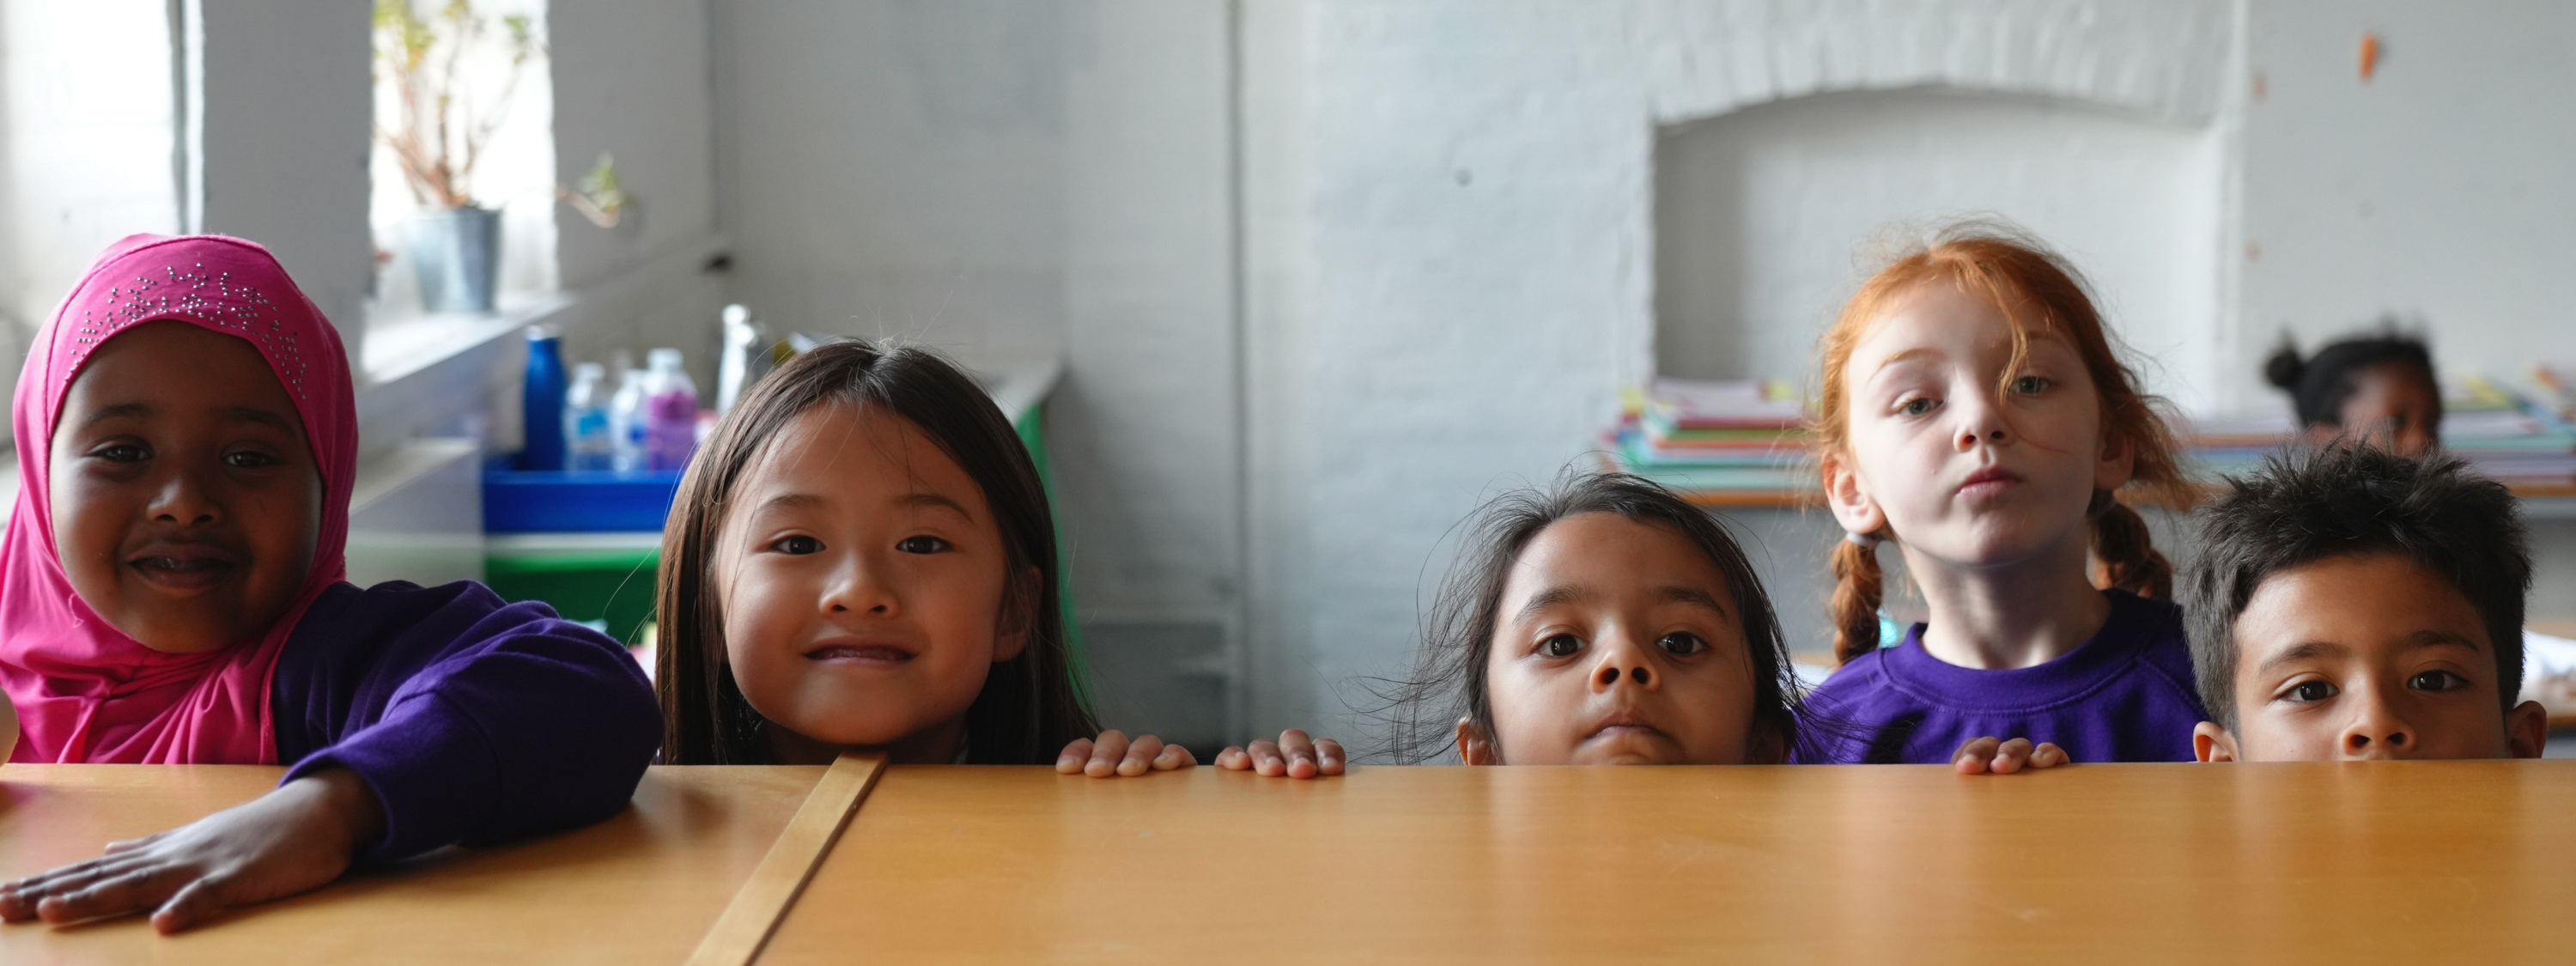 Vittoria primary school - children peering over table in classroom